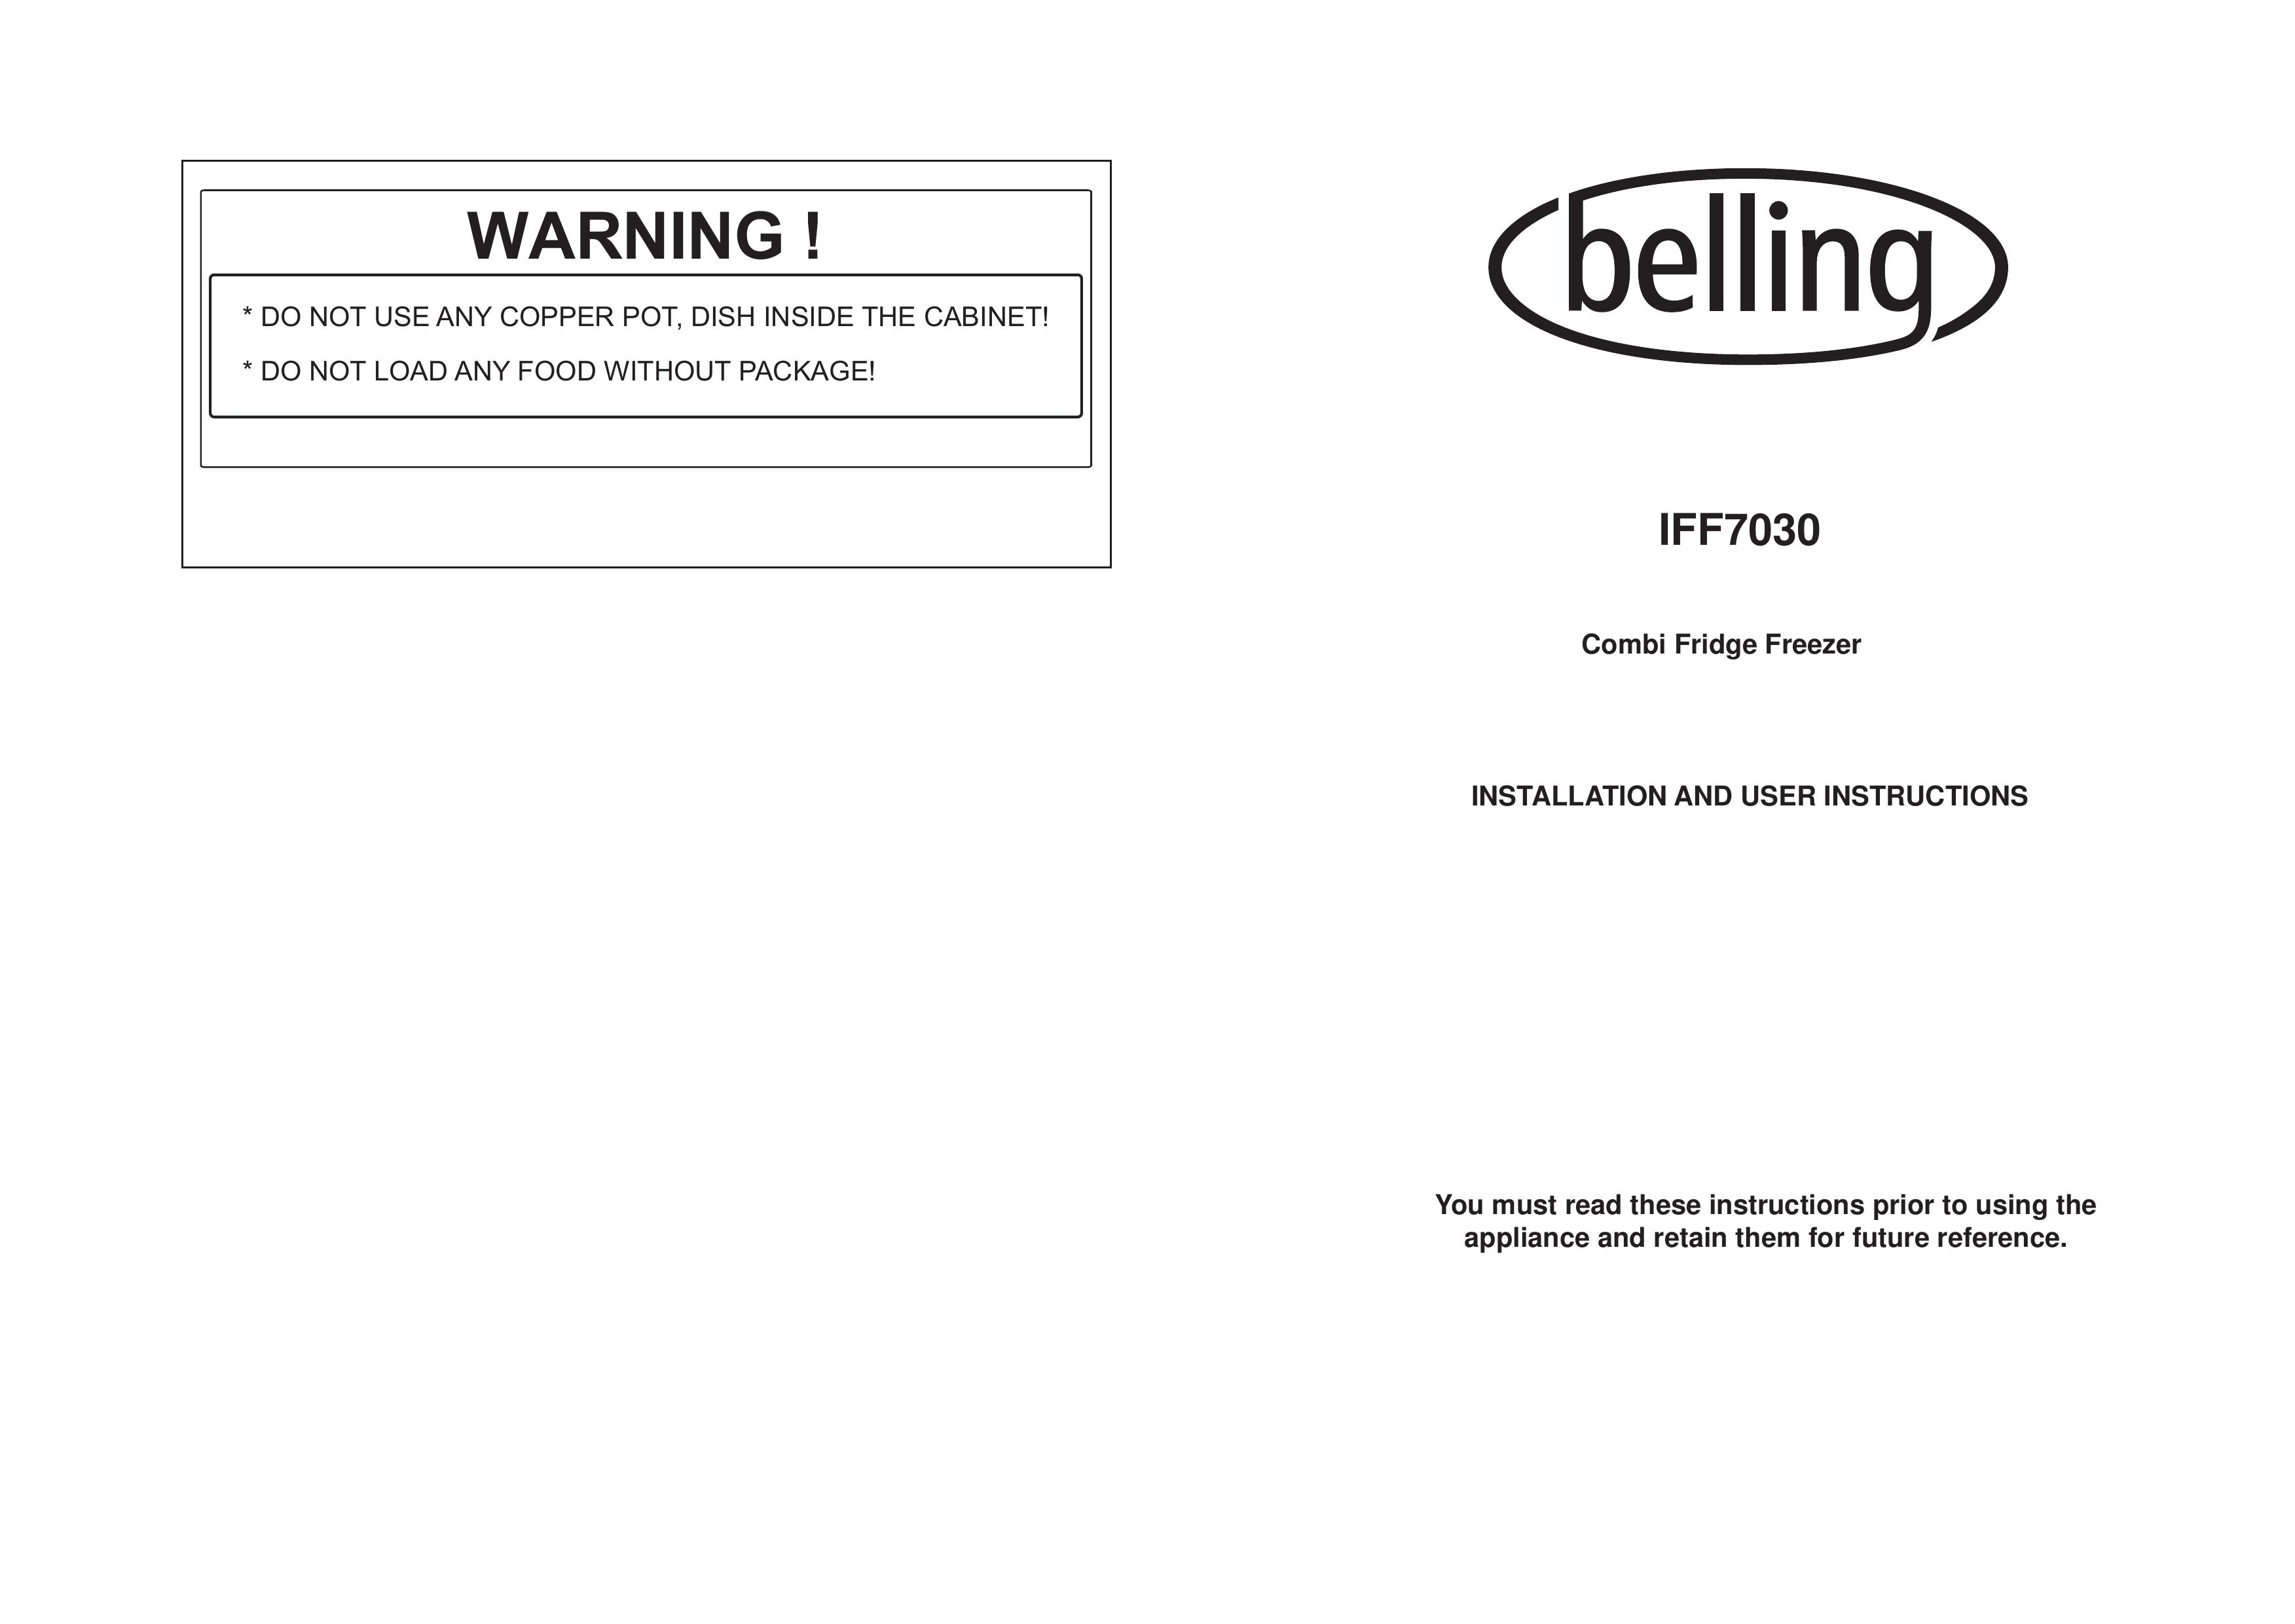 Glen Dimplex Home Appliances Ltd IFF7030 Refrigerator User Manual